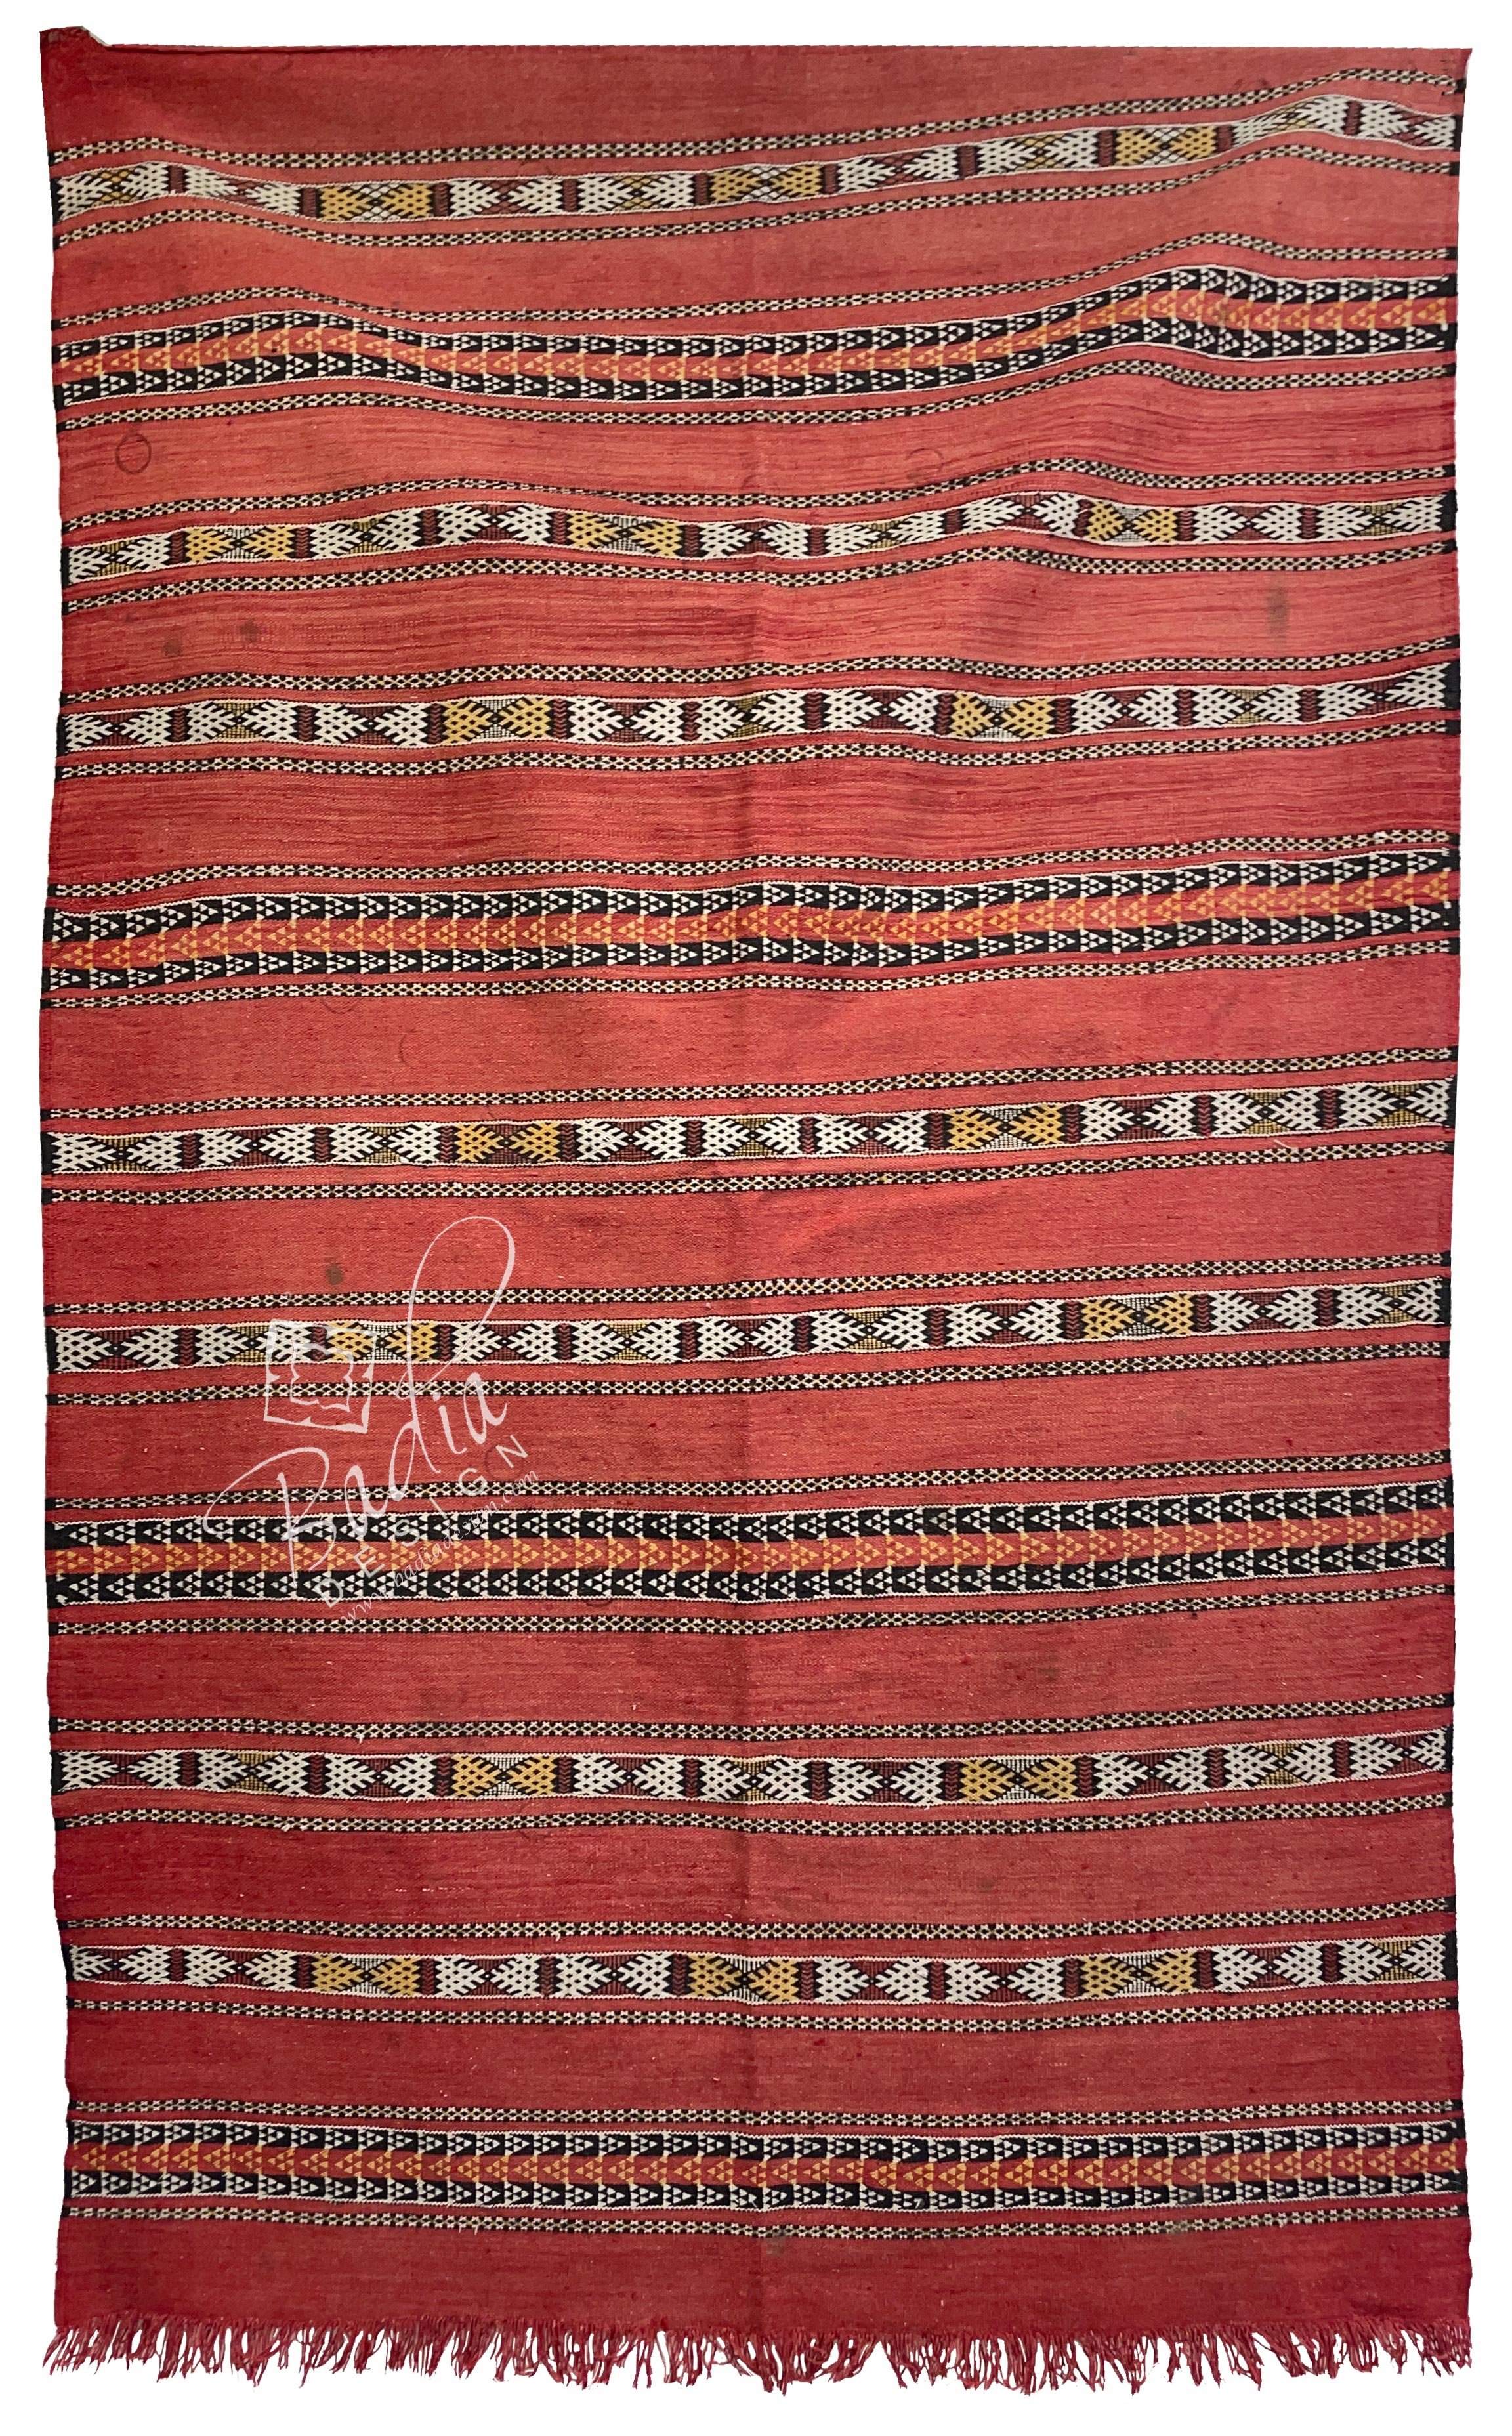 handmade-moroccan-kilim-rugs-for-sale-r0235.jpg